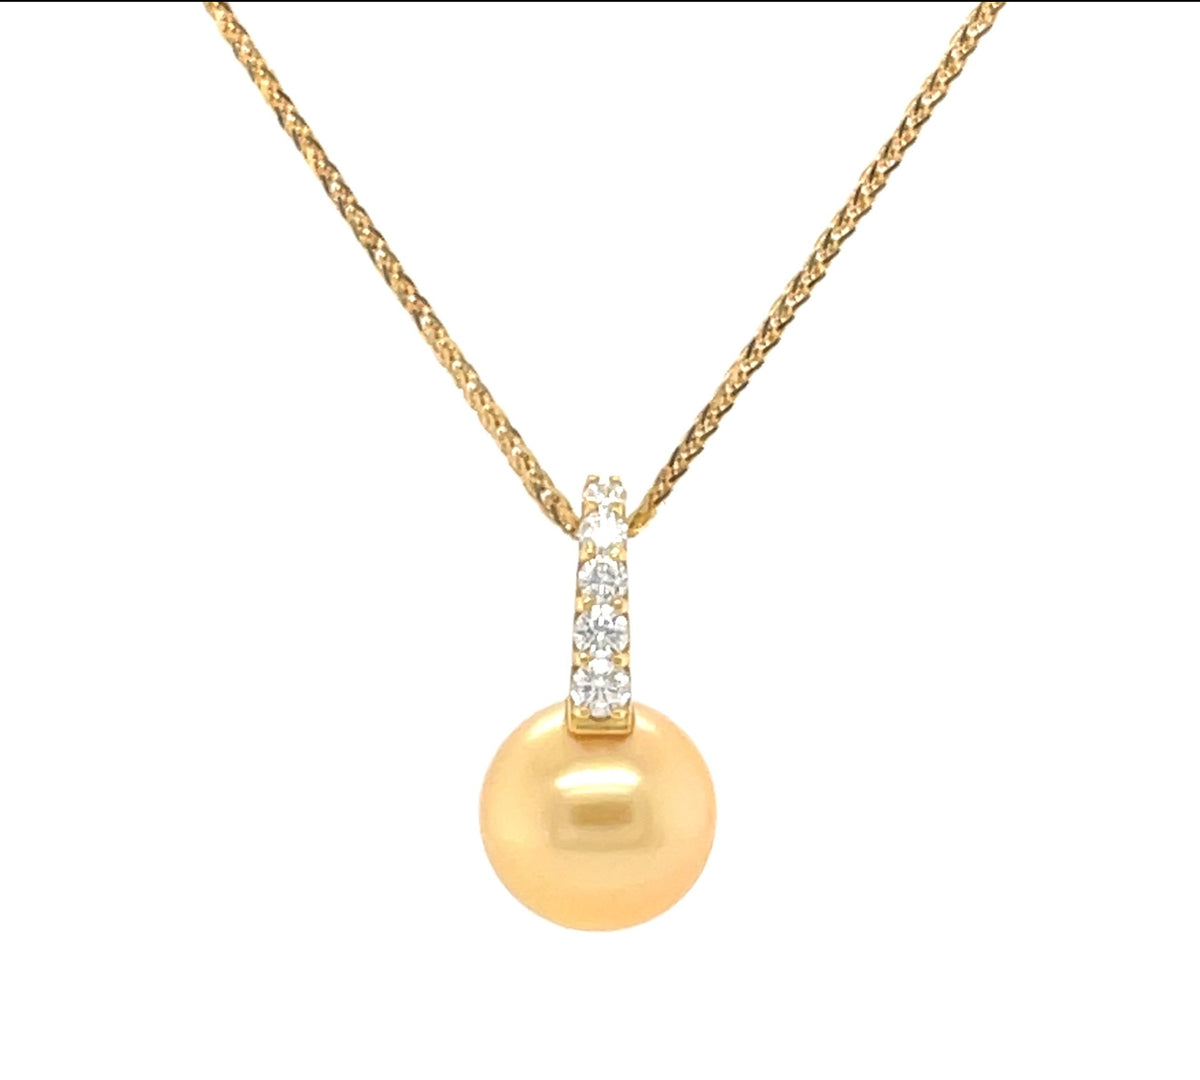 18K White Gold 7.48ctw Diamond Necklace